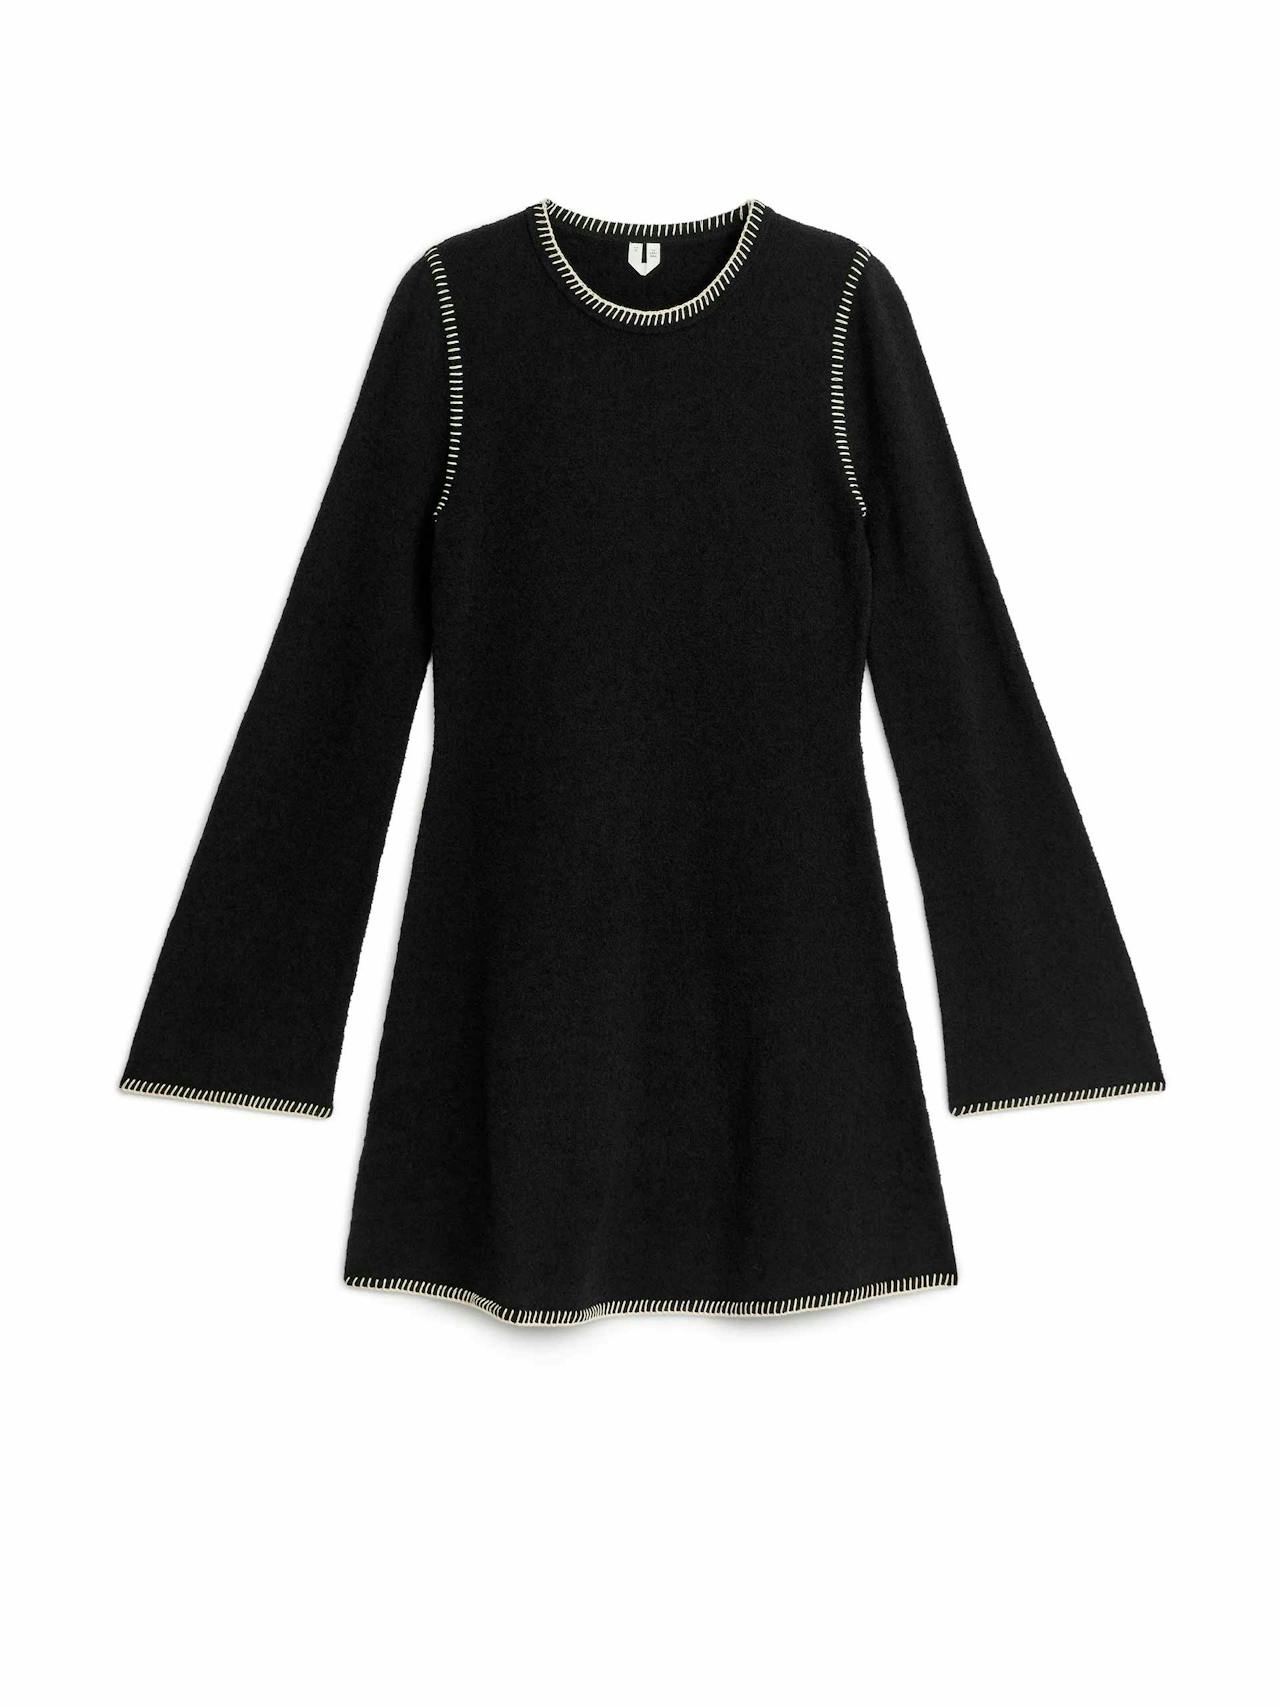 Black blanket stitch knitted dress